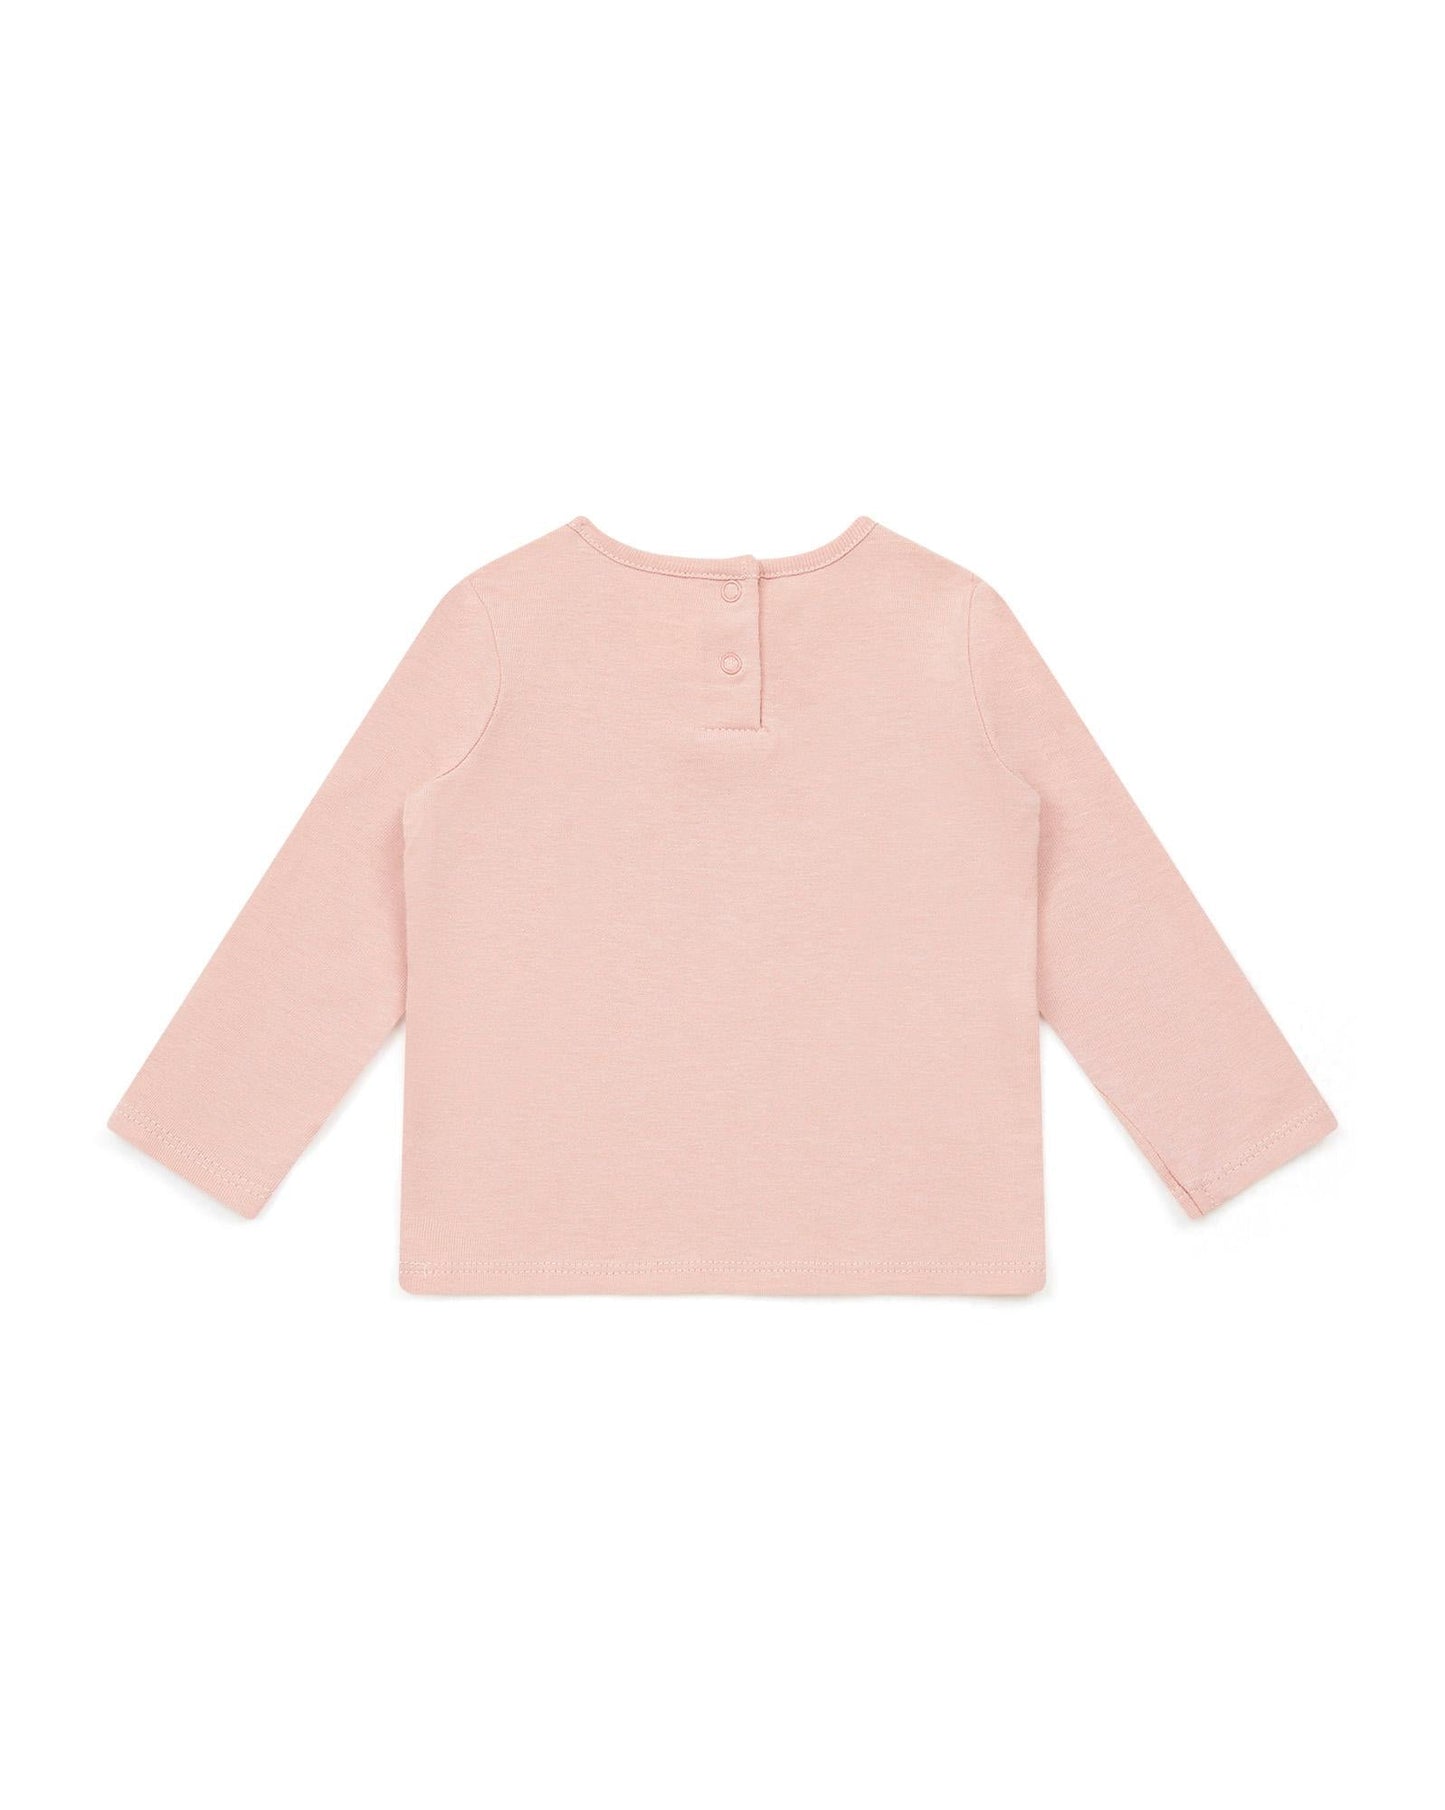 T-shirt ML Coeur Pink Baby In 100% organic cotton